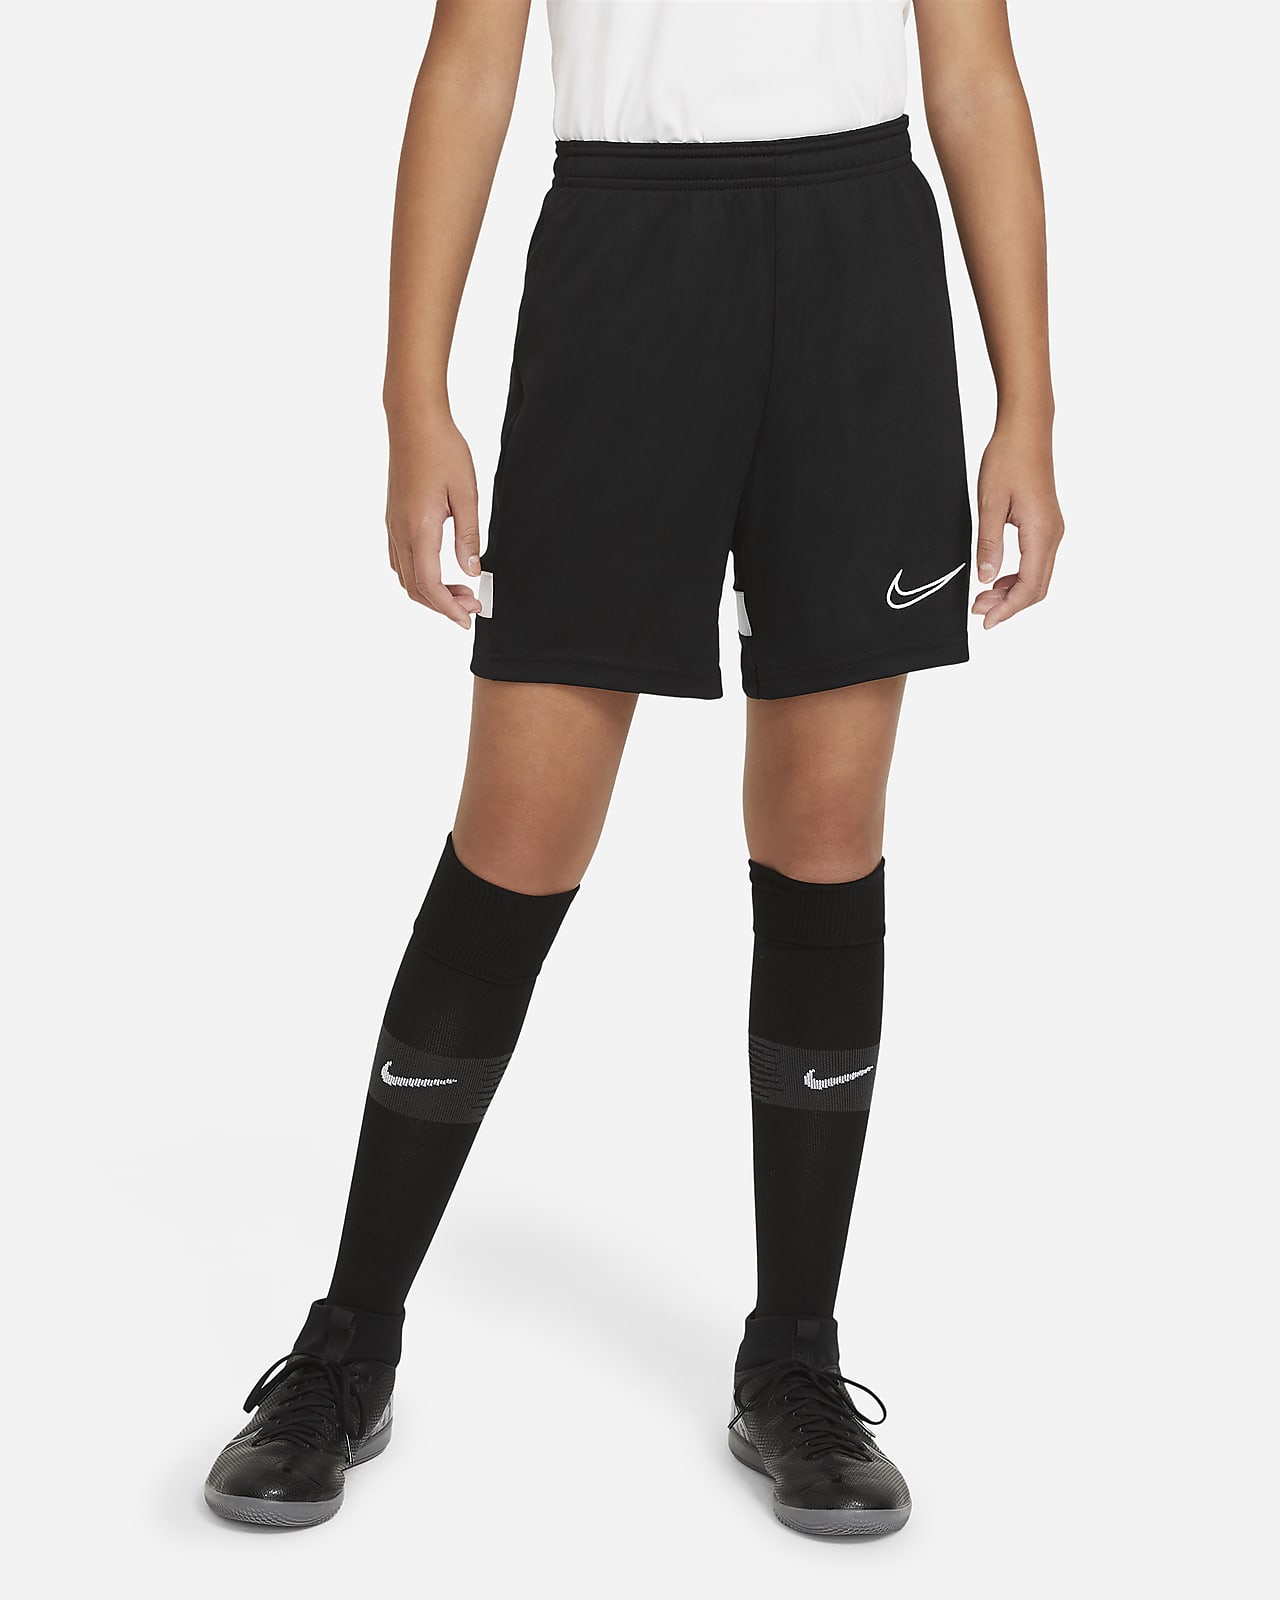 academy soccer shorts